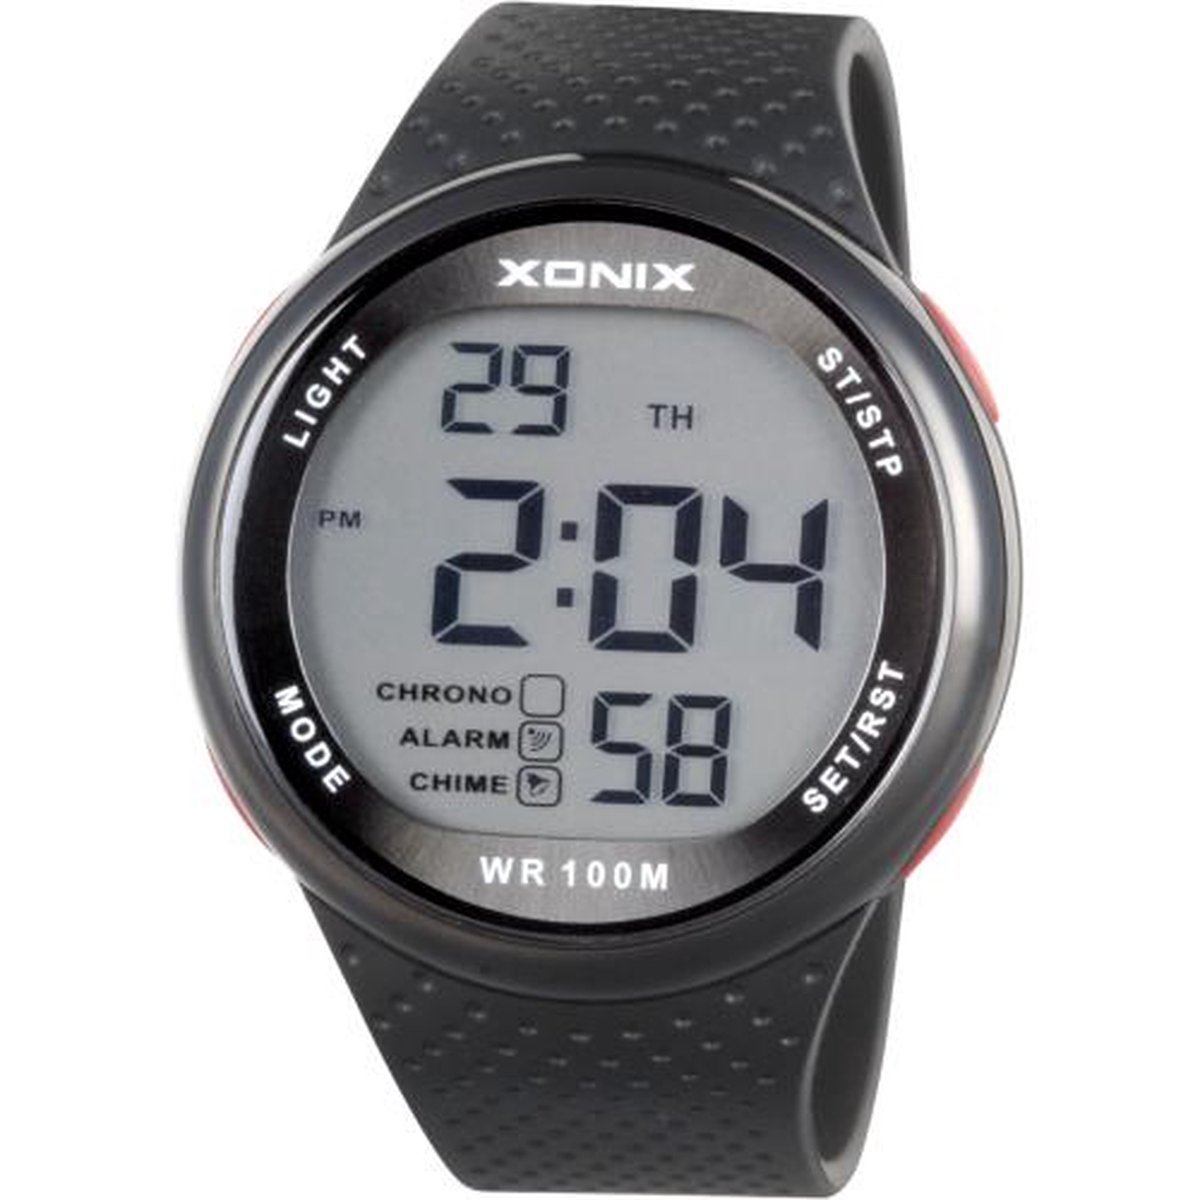 Xonix GJ-007A - Horloge - Digitaal - Heren - Mannen - Rond - Siliconen band - ABS - Cijfers - Achtergrondverlichting - Alarm - Start-Stop - Chronograaf - Tweede tijdzone - Waterdicht - 10 ATM - Zwart - Rood